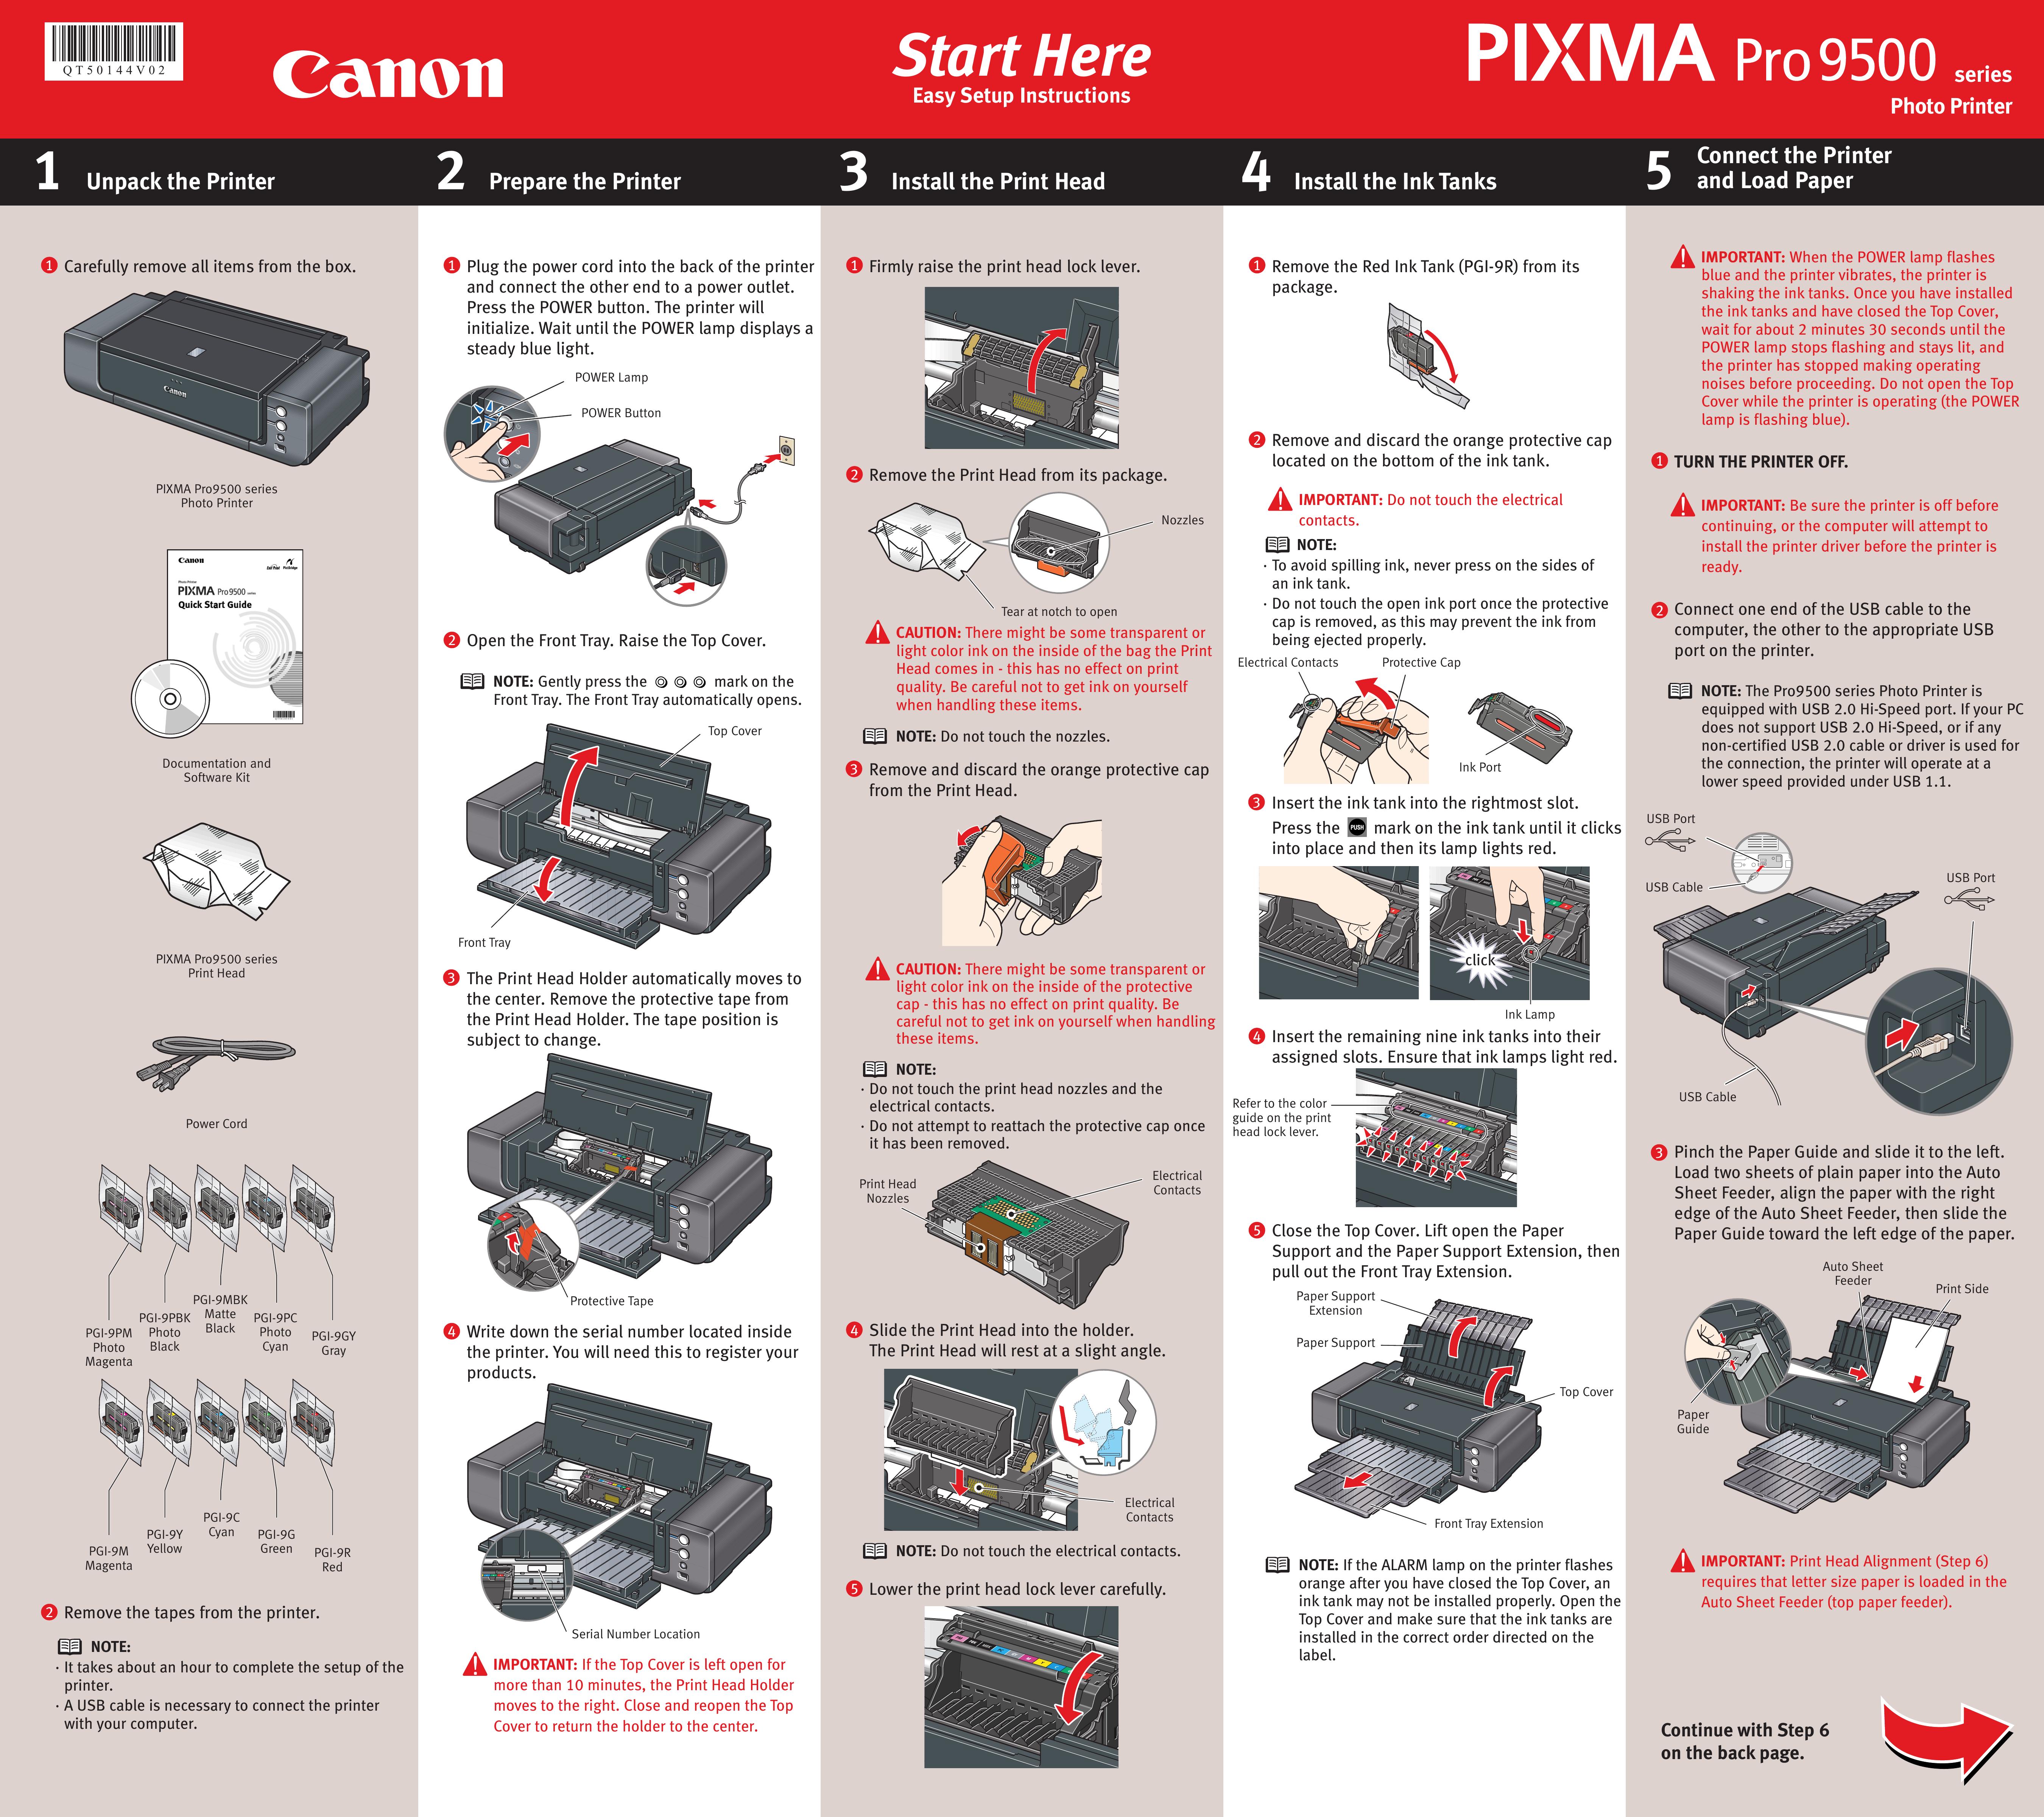 Canon 9500 Series Photo Printer User Manual